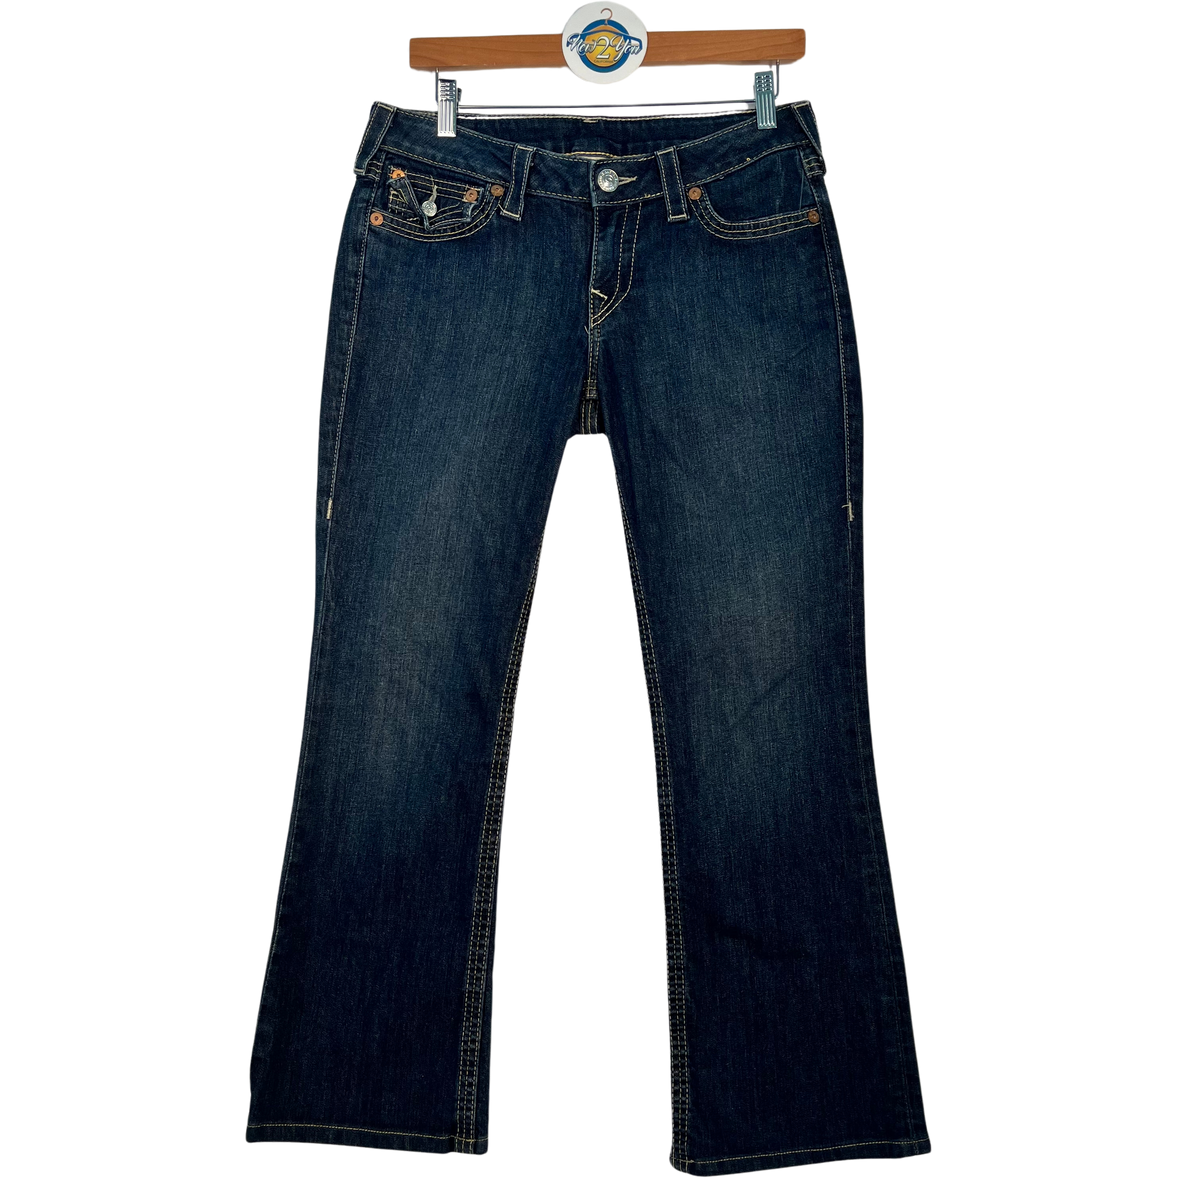 Low-Rise Bootcut Dark Wash Jeans (True Religion)